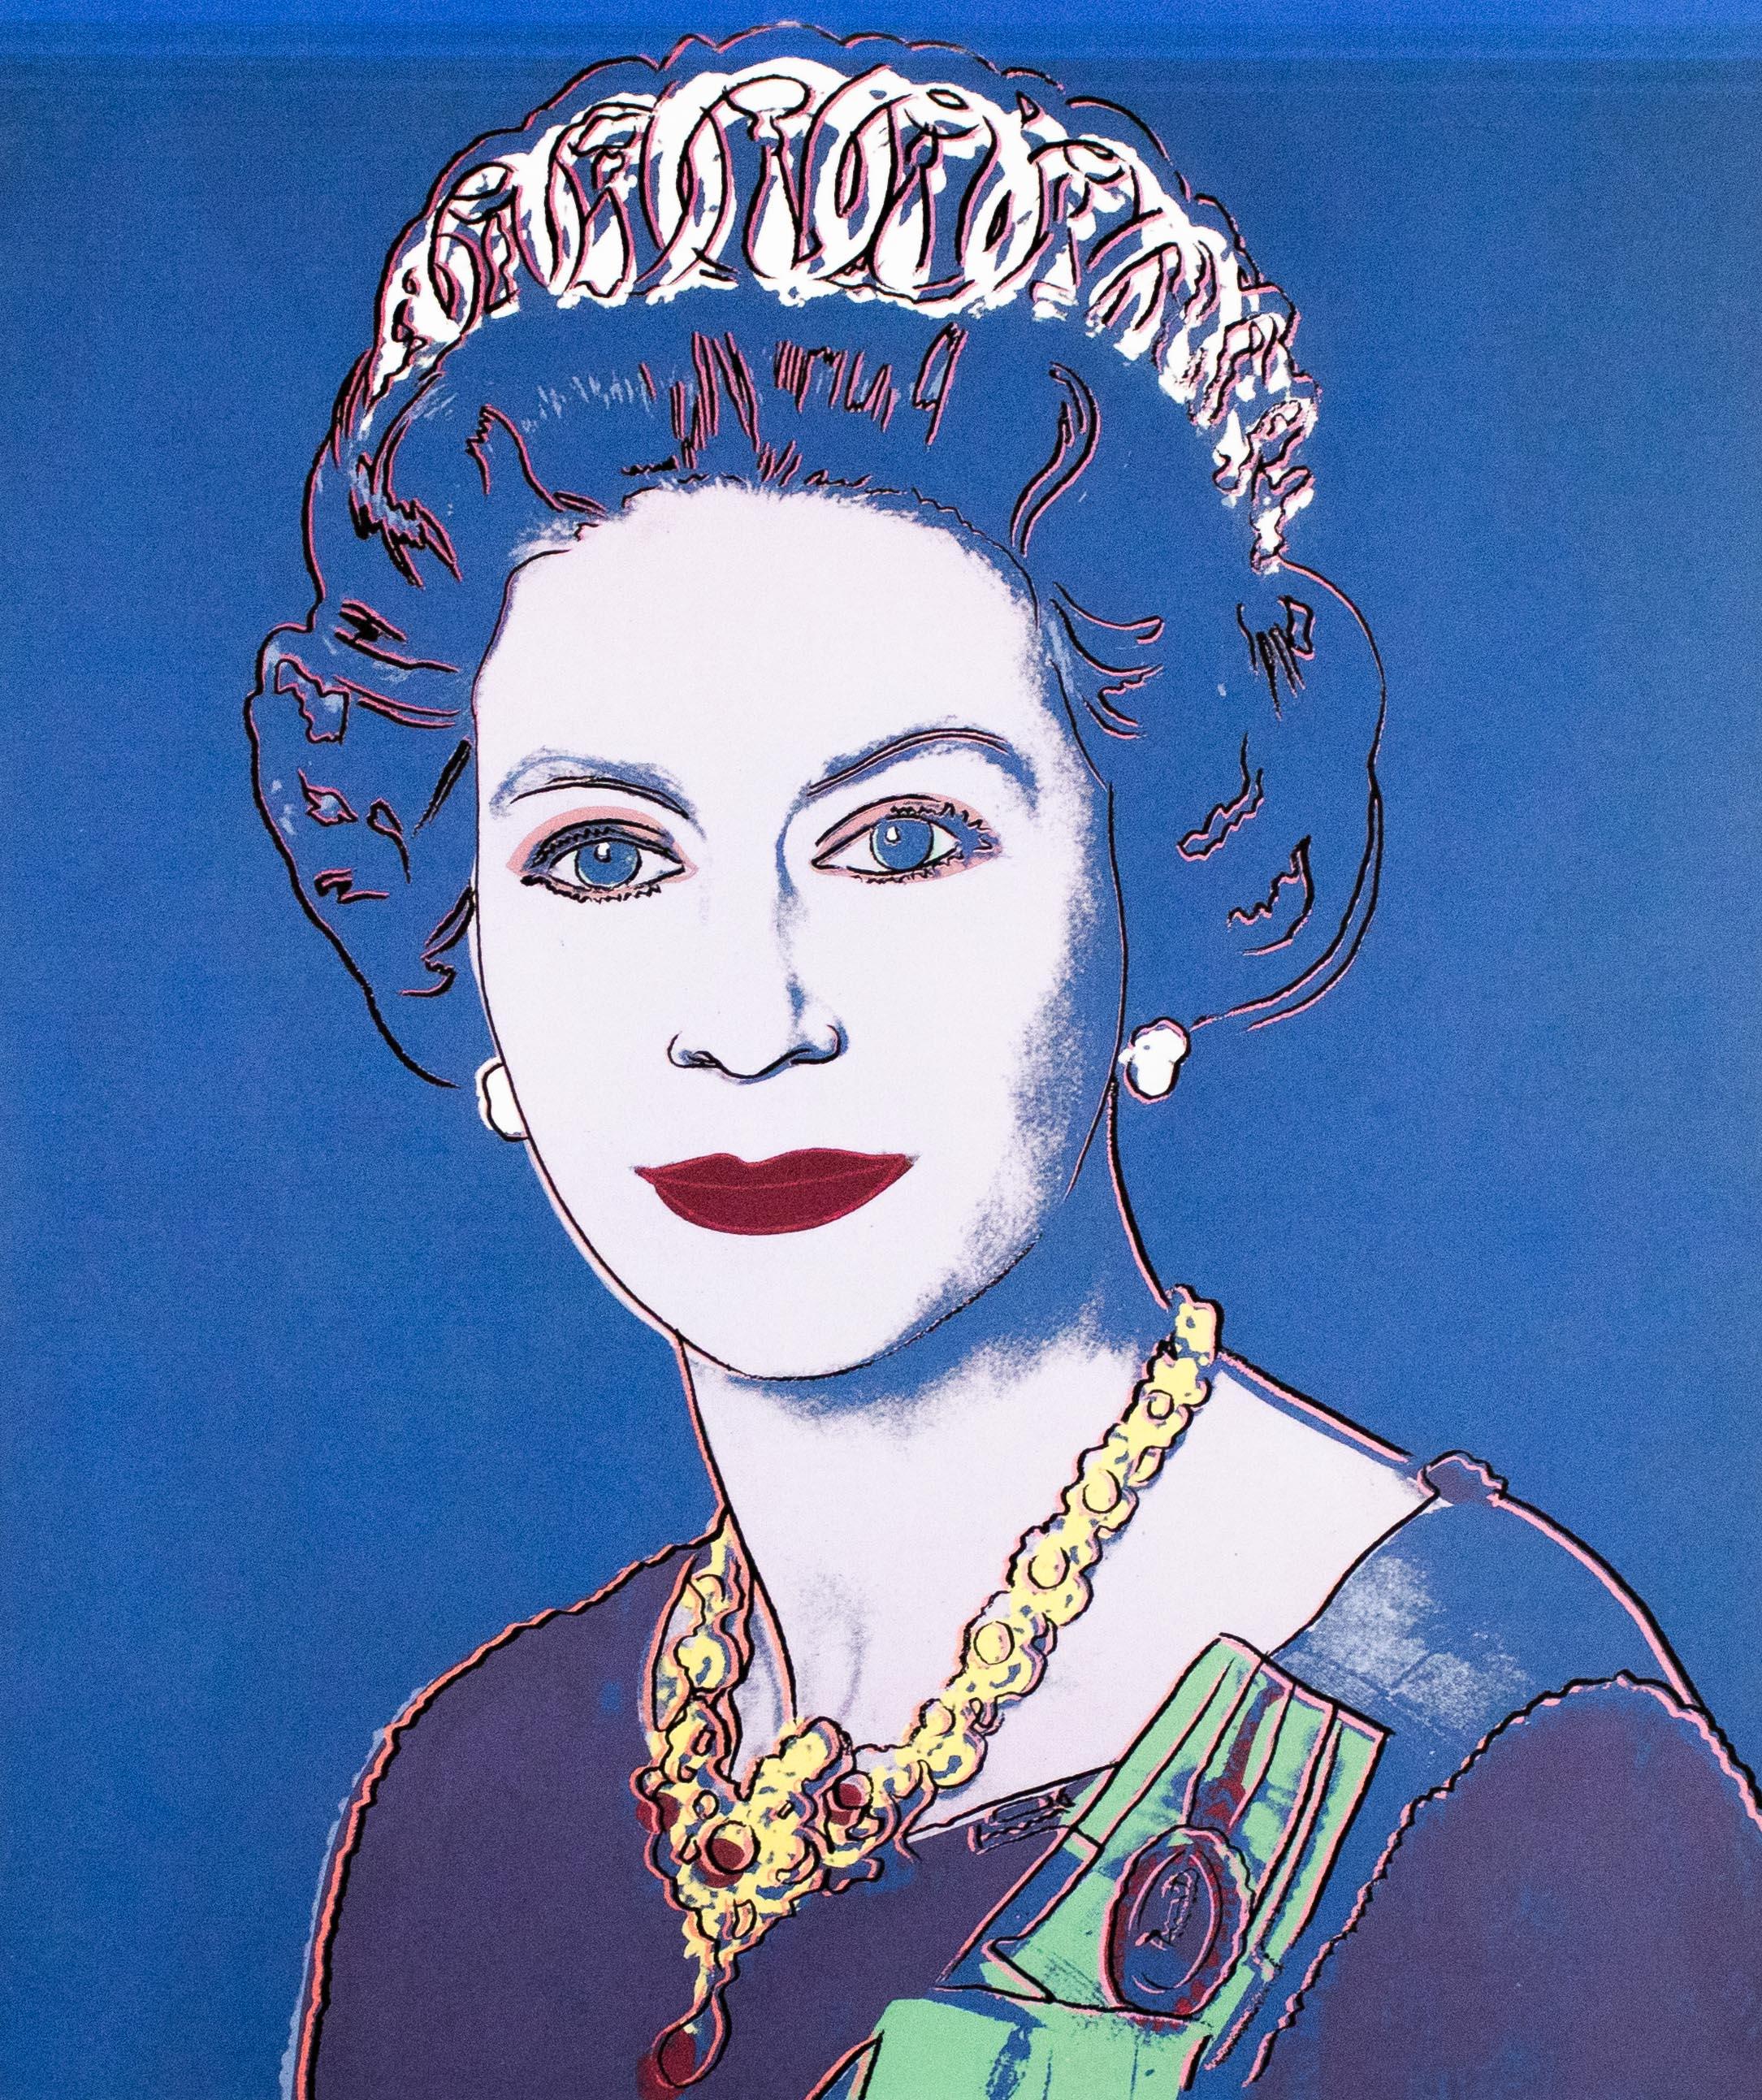 Andy Warhol Figurative Print - Queen Elizabeth II - 1983 - Original Lithograph - Limited Edition Print - 88/100